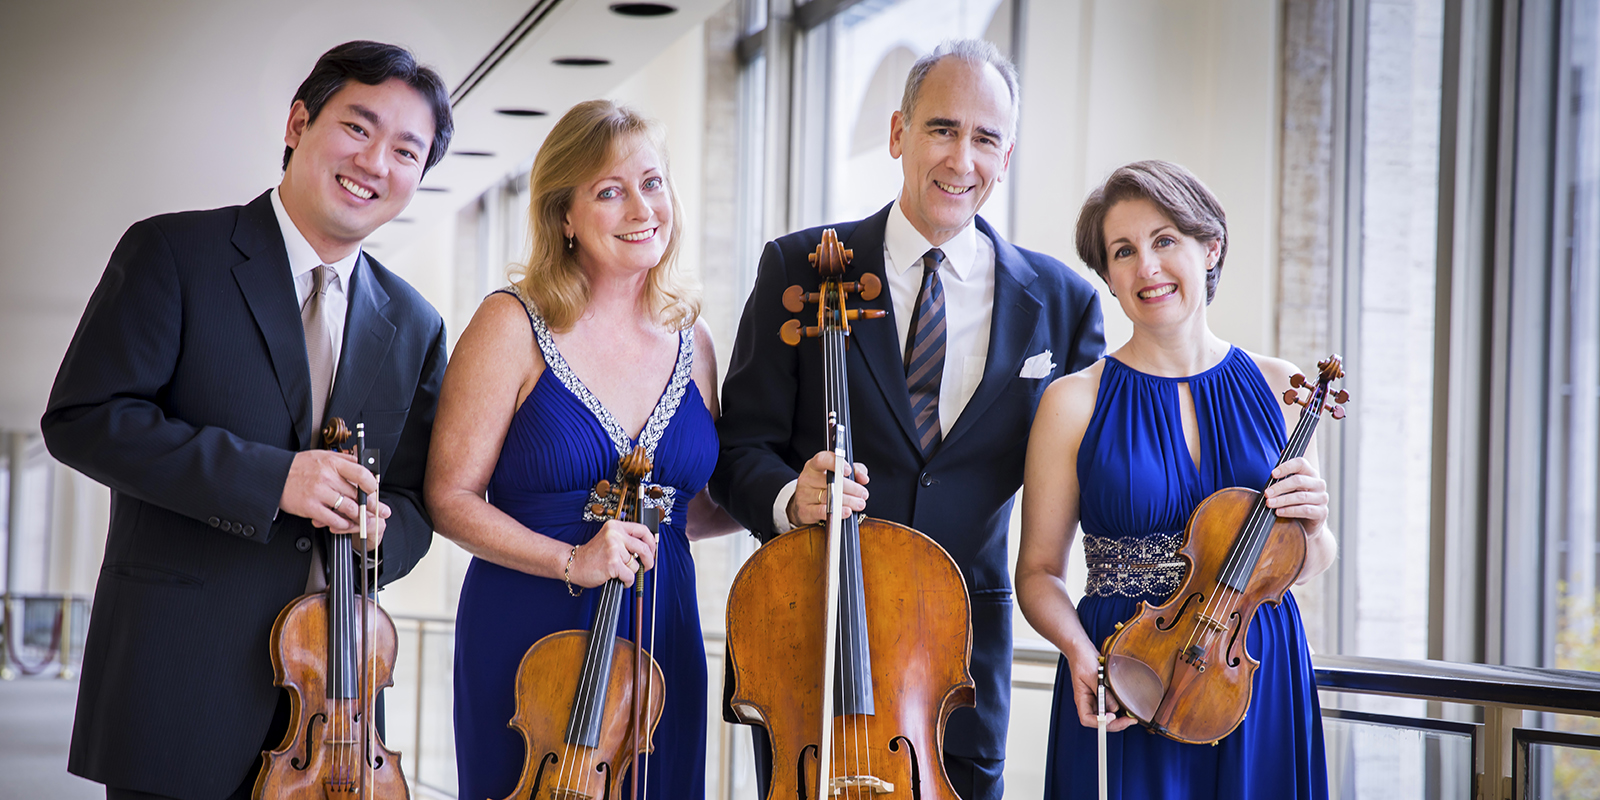 New York Philharmonic String Quartet to make Athens debut